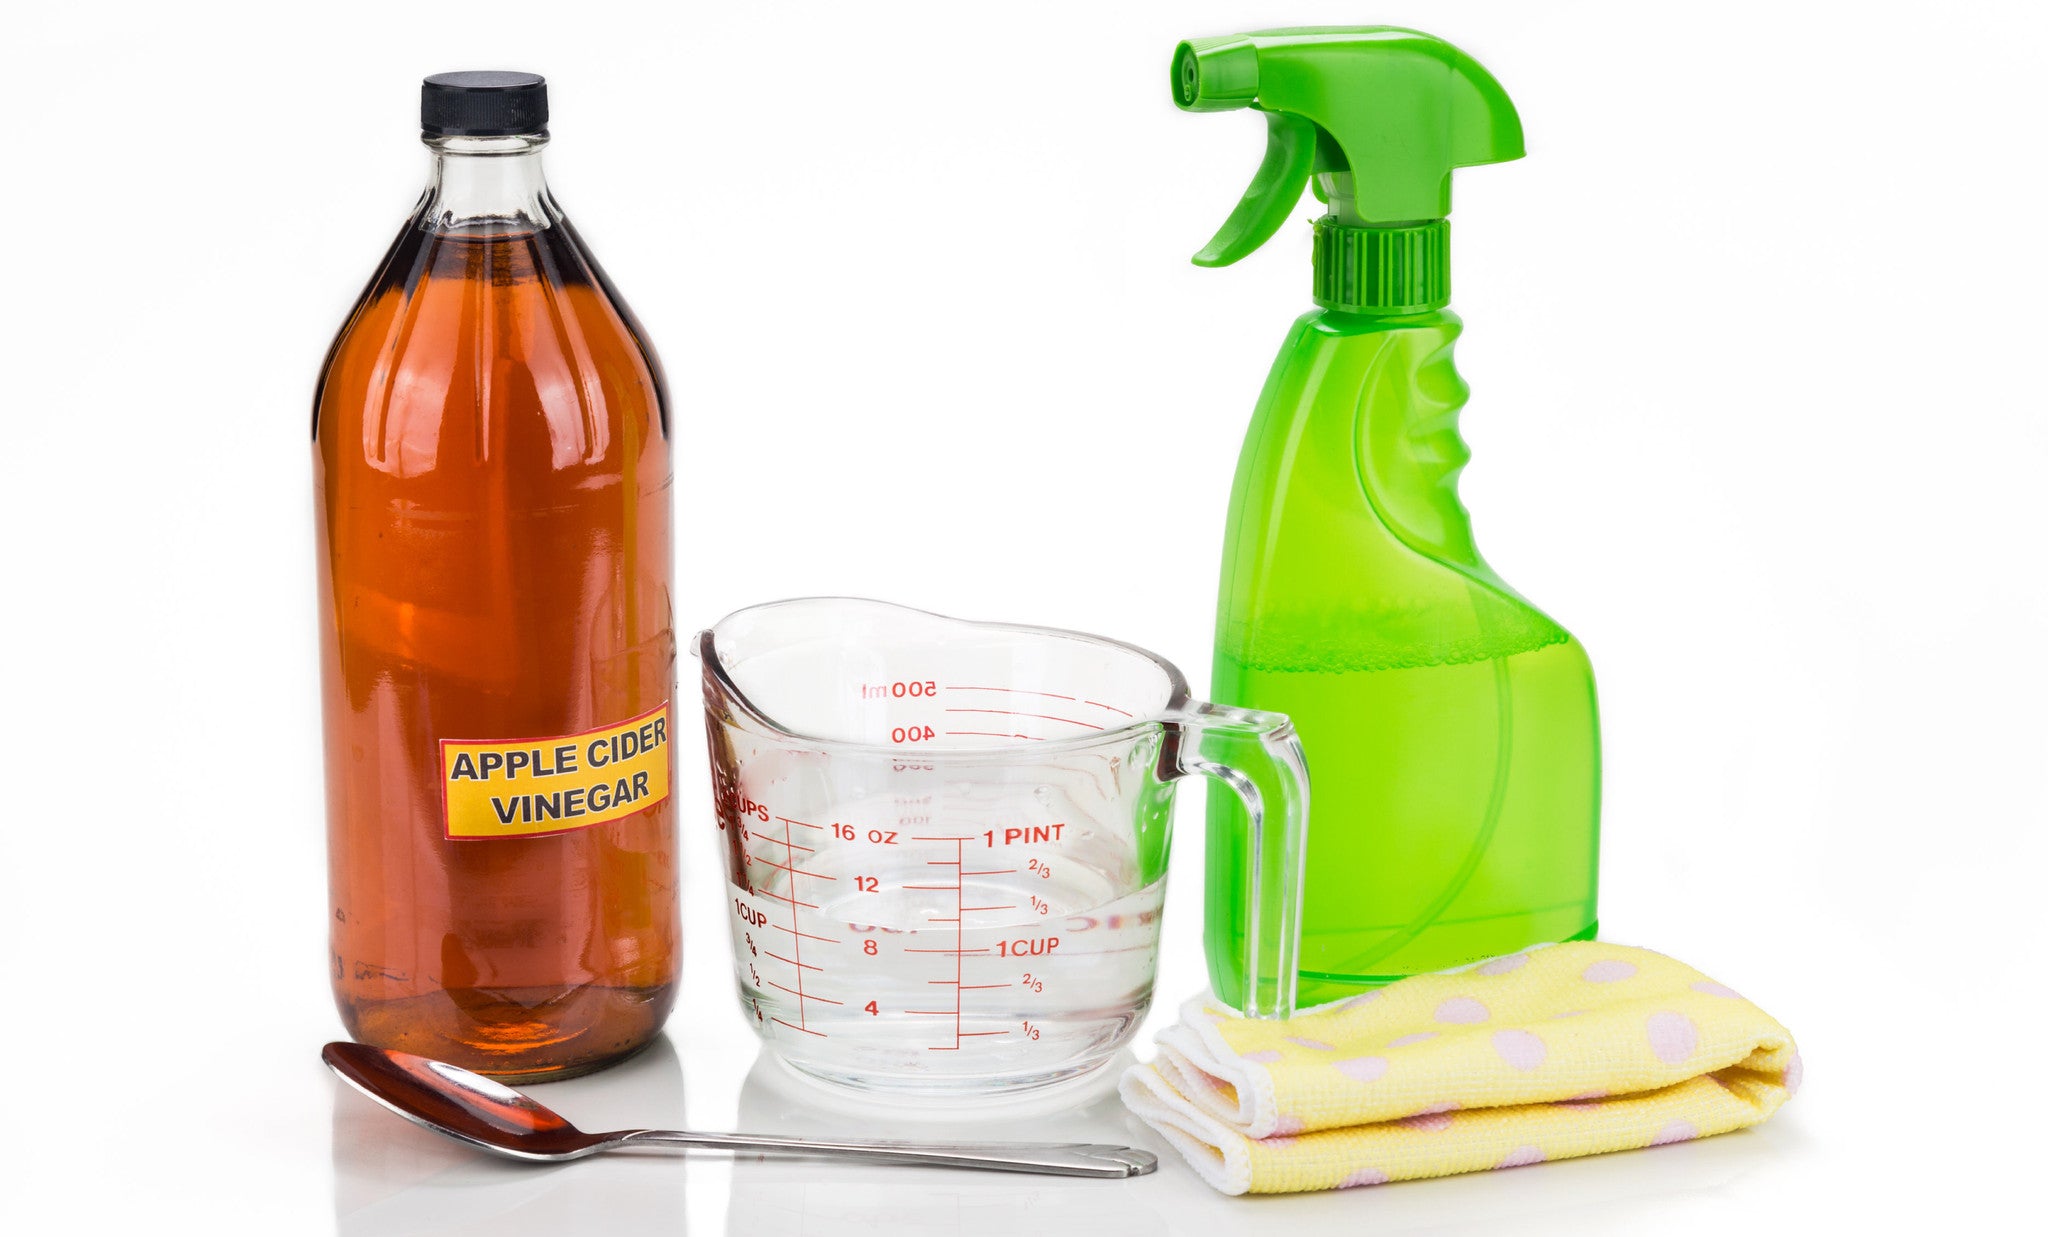 Apple Cider Vinegar for cleaning 